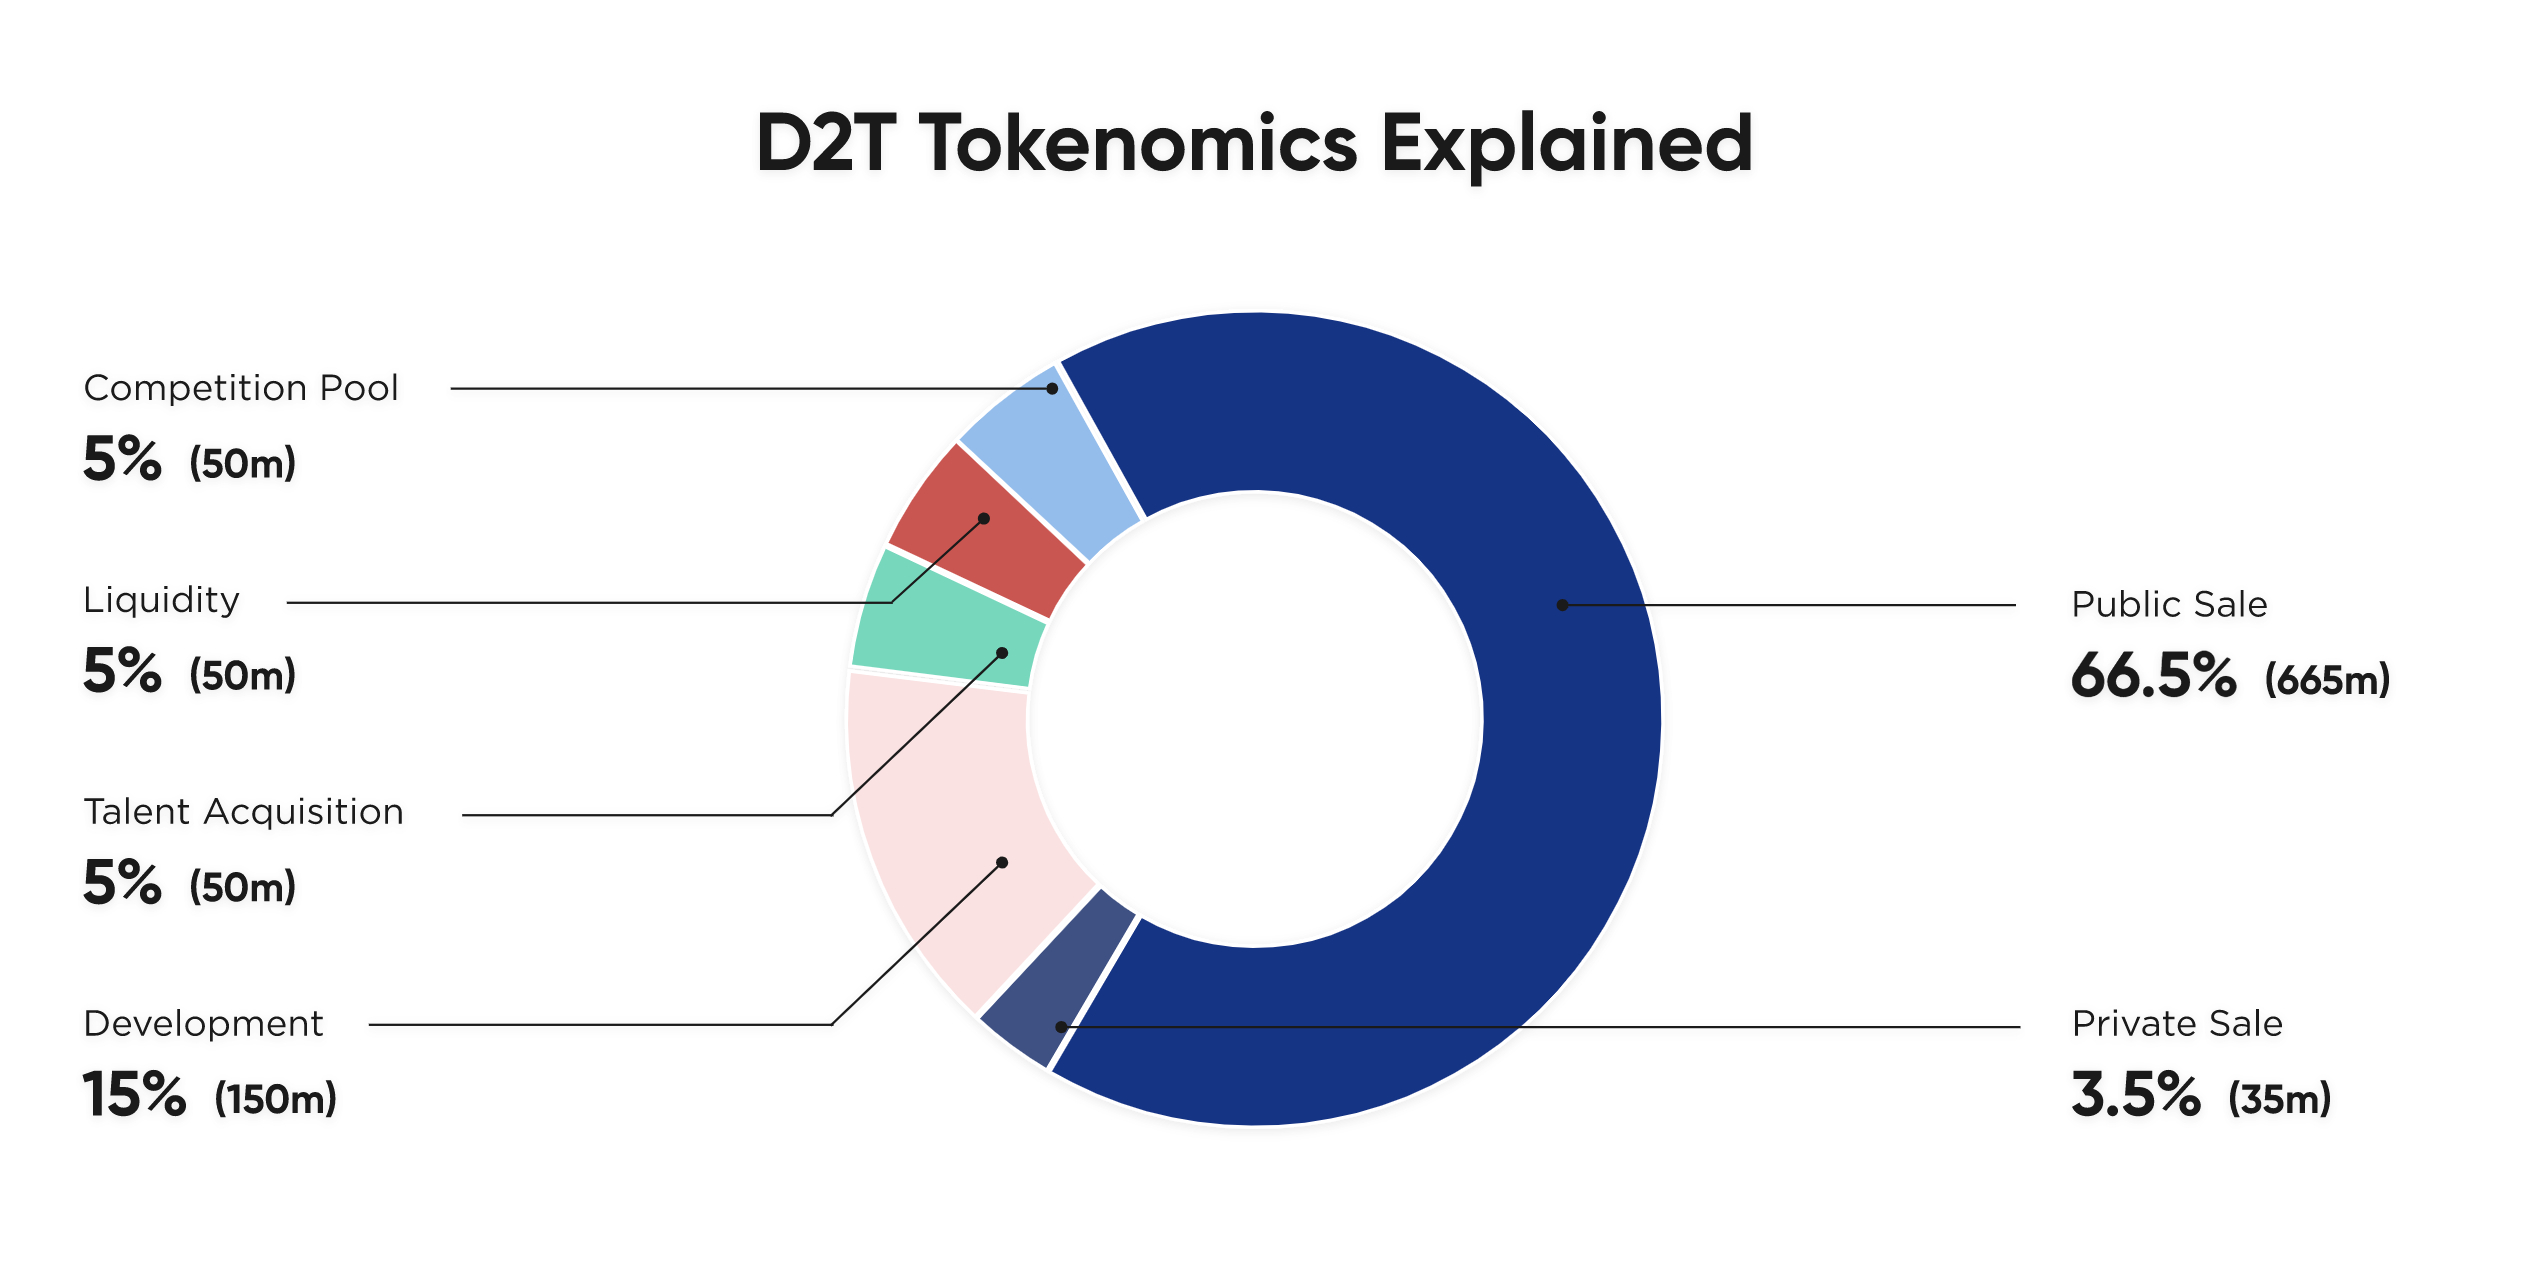 D2T tokenomics